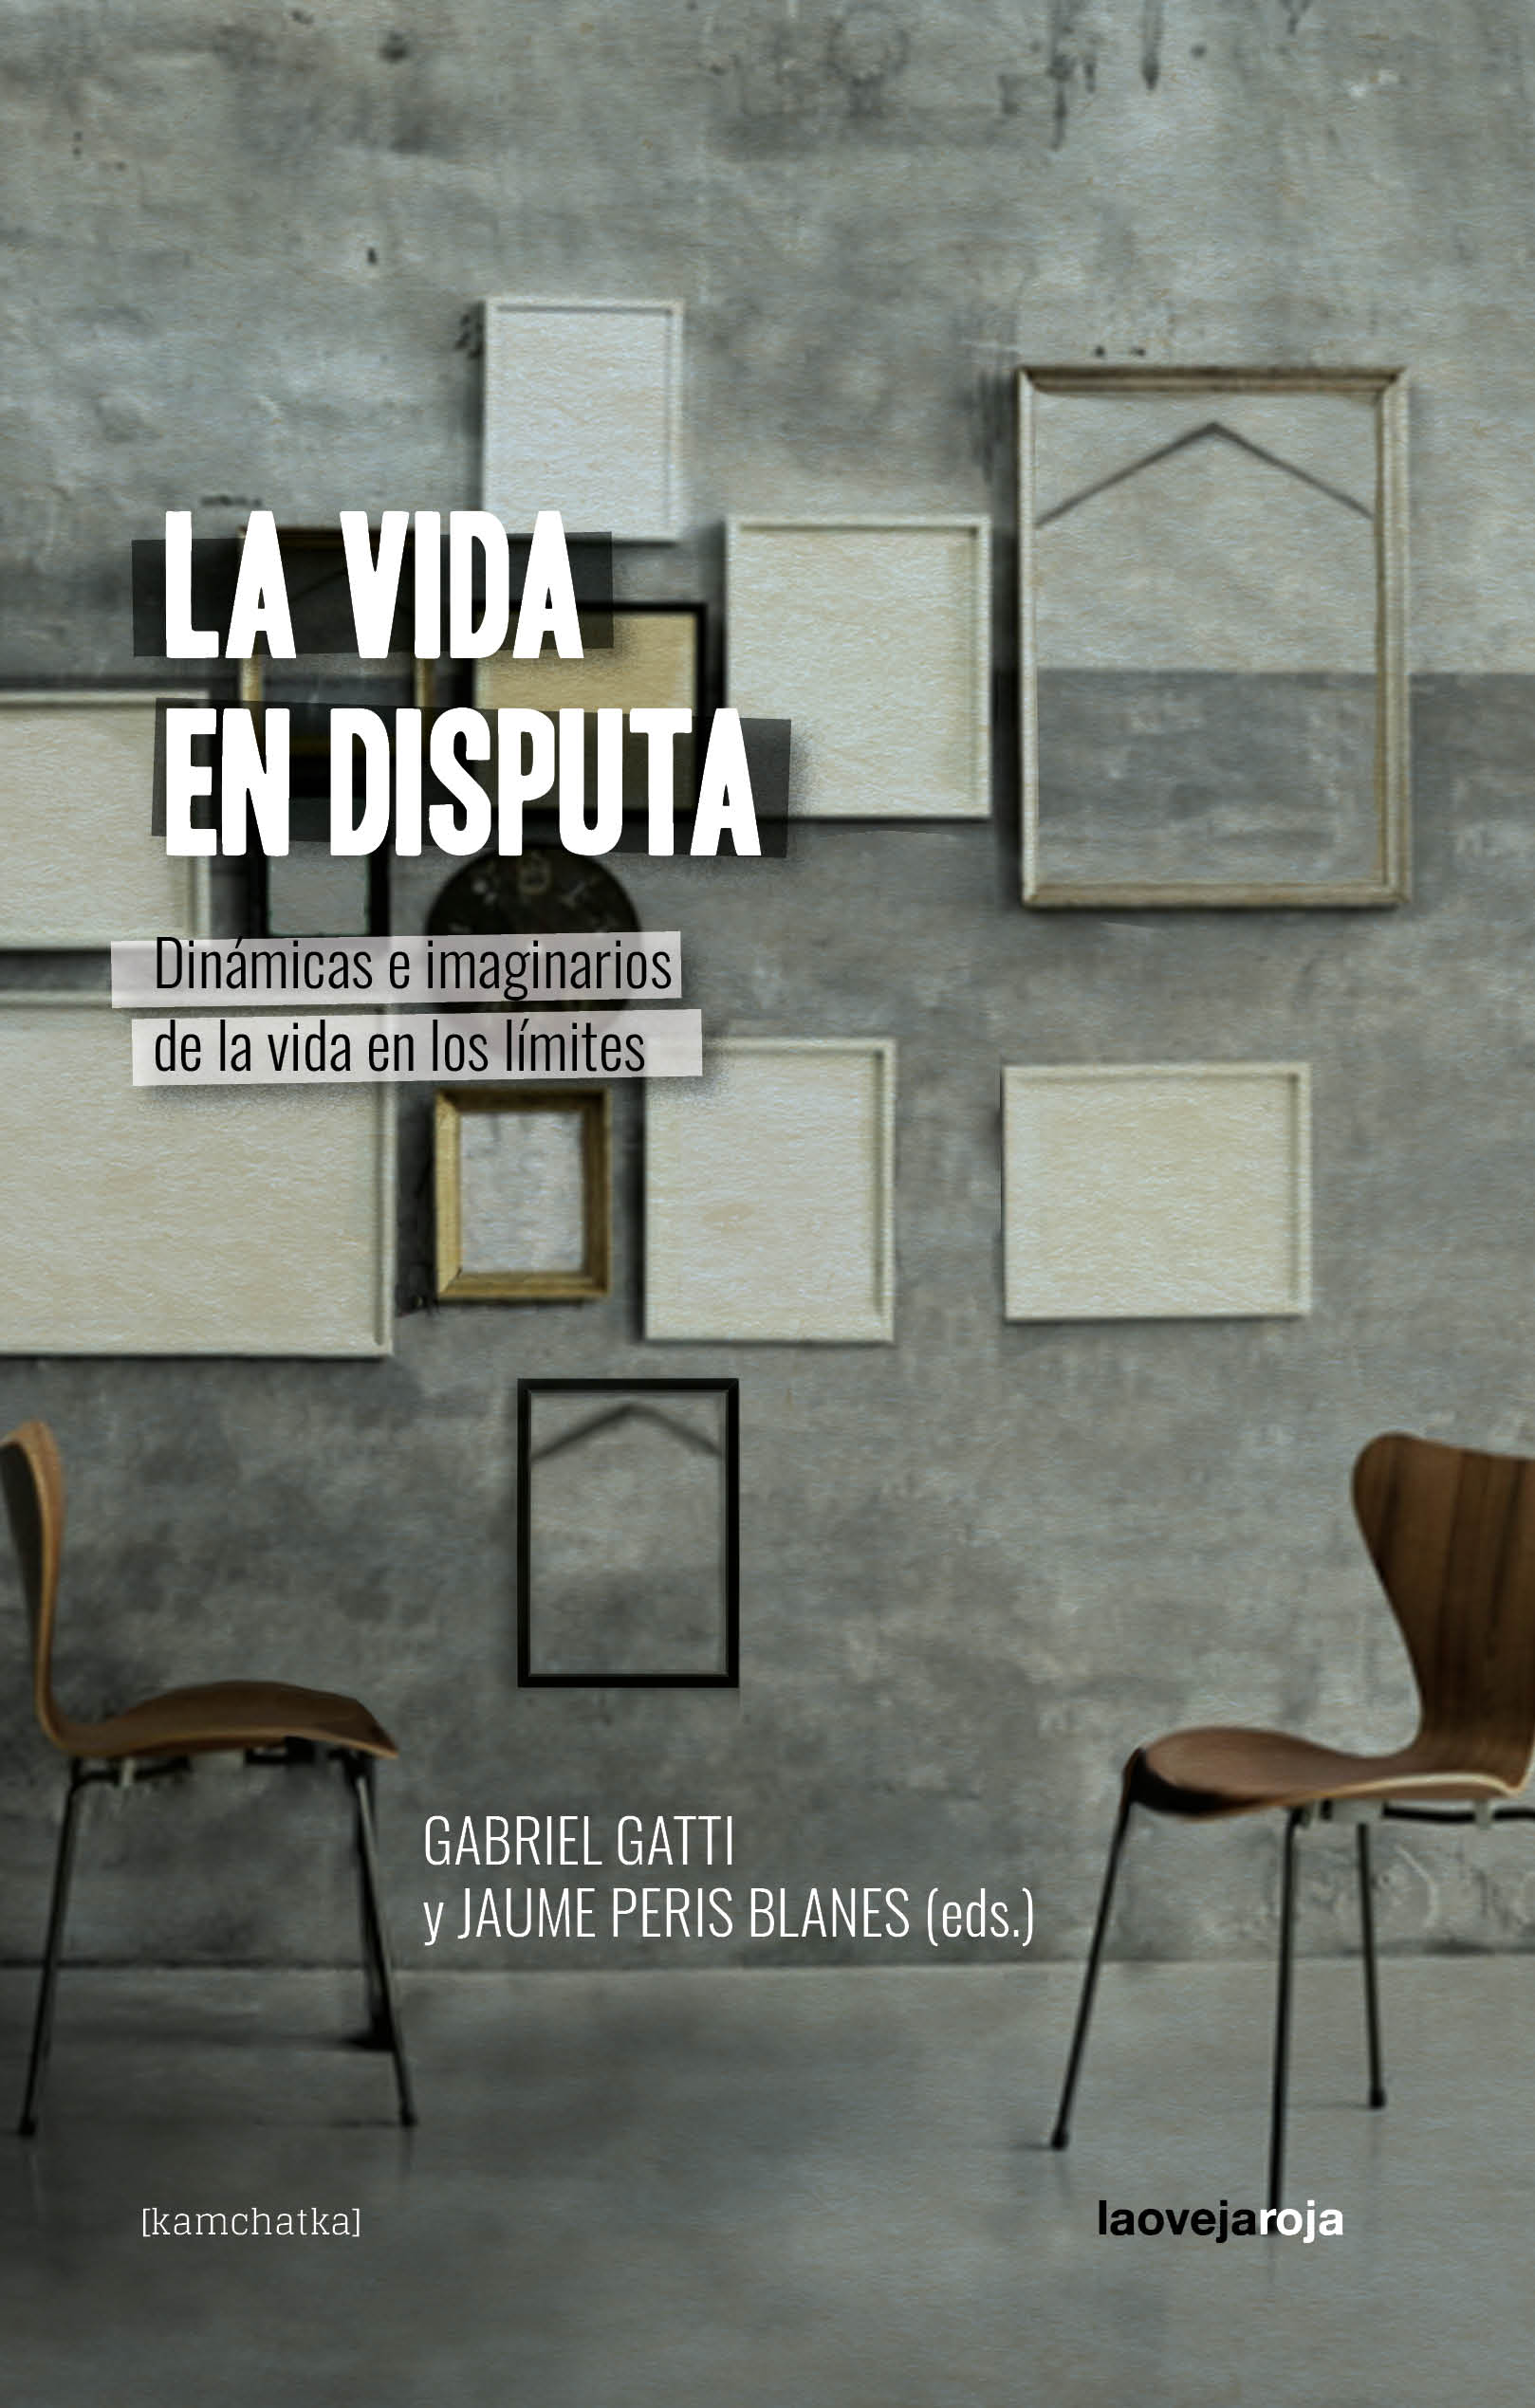 La vida en disputa - Gabriel Gatti | Jaume Peris Blanes